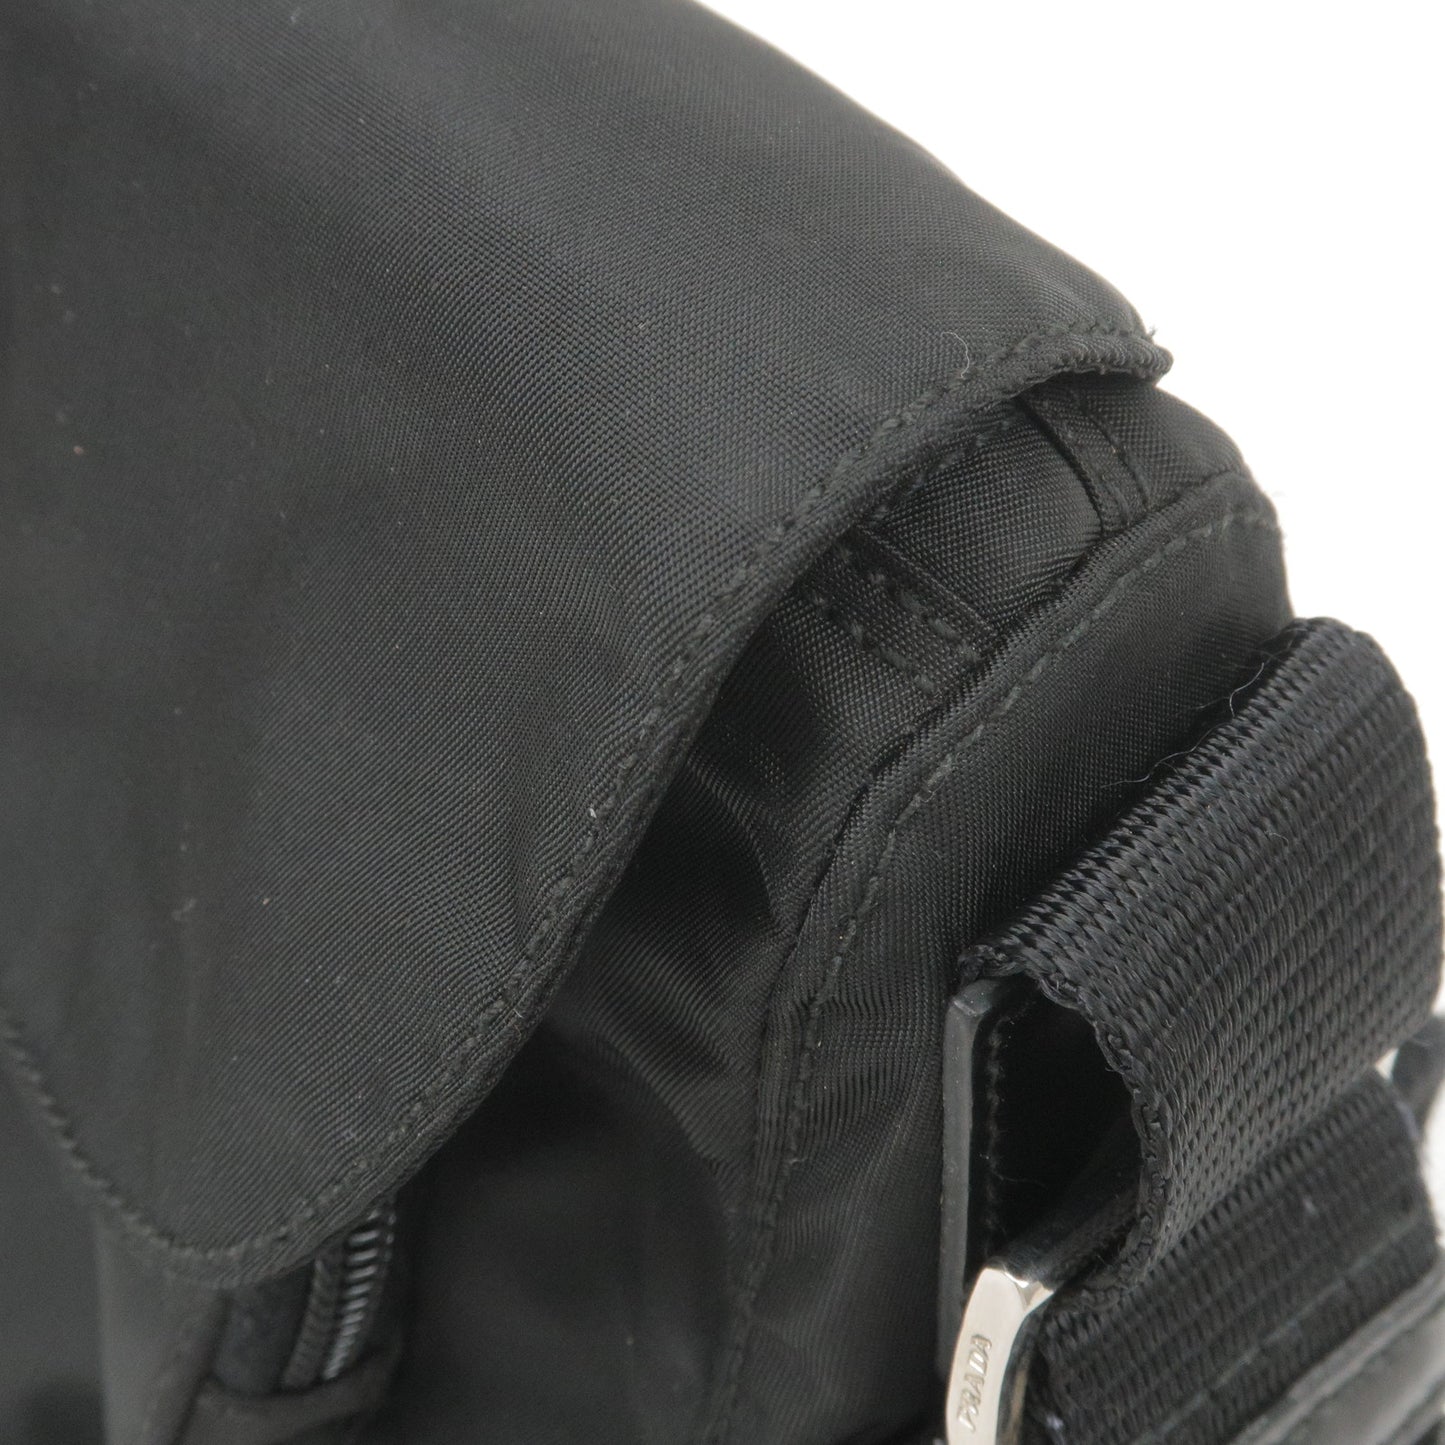 PRADA Logo Nylon Leather Shoulder Bag NERO Black BT0501